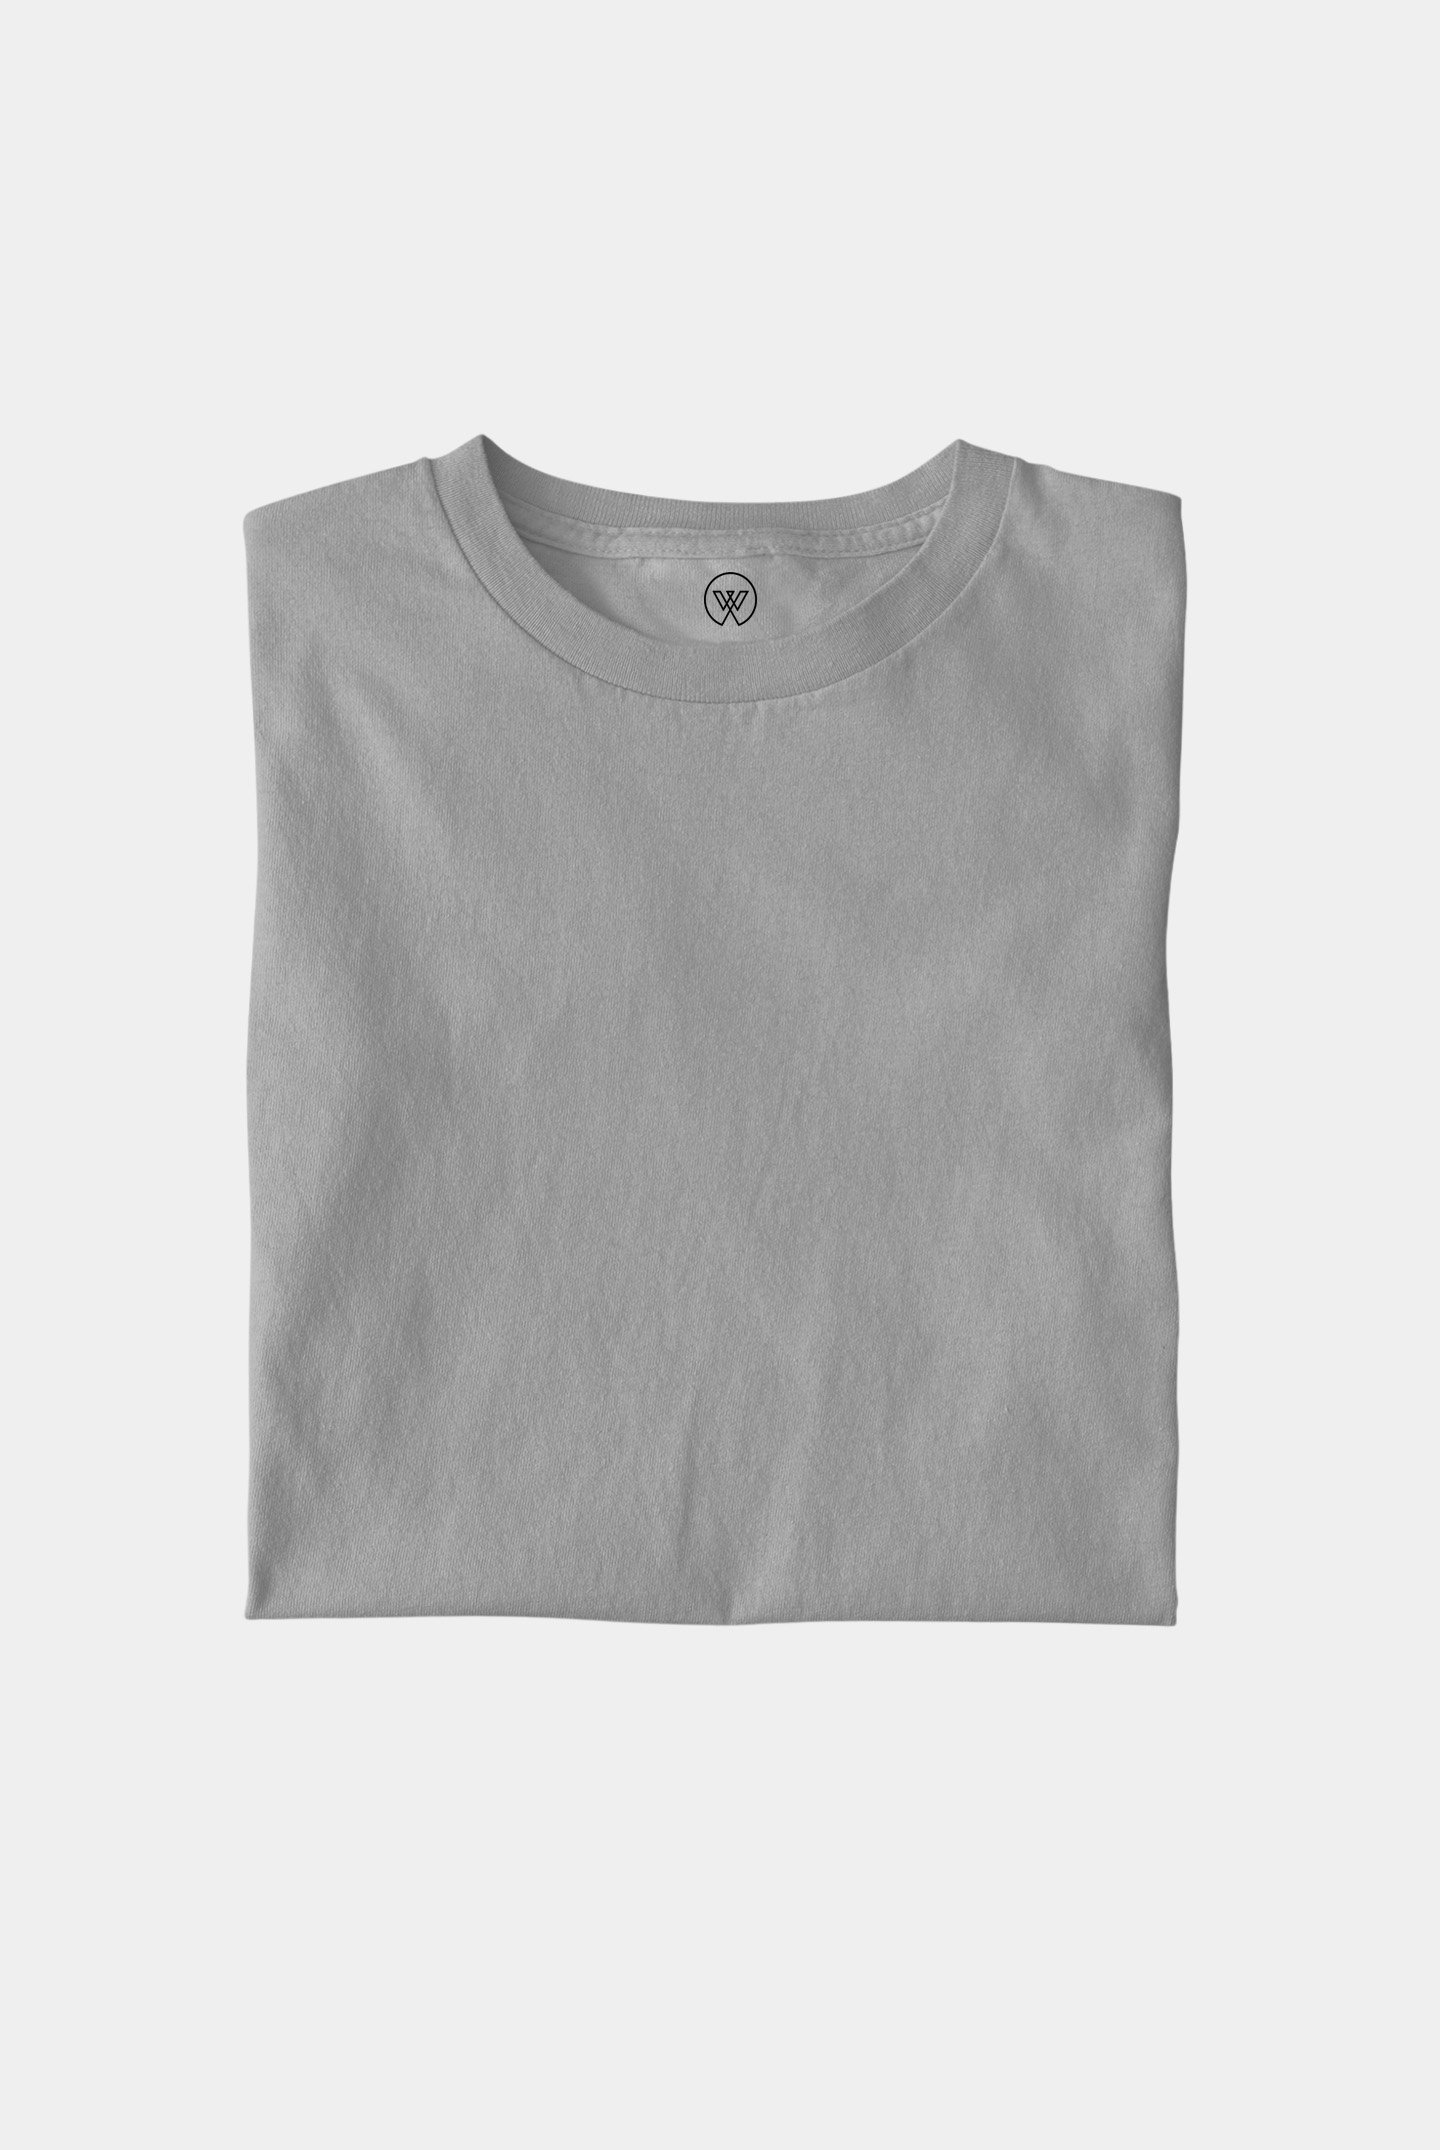 Moon Grey Solid T-Shirt by Wayward Wayz Folded